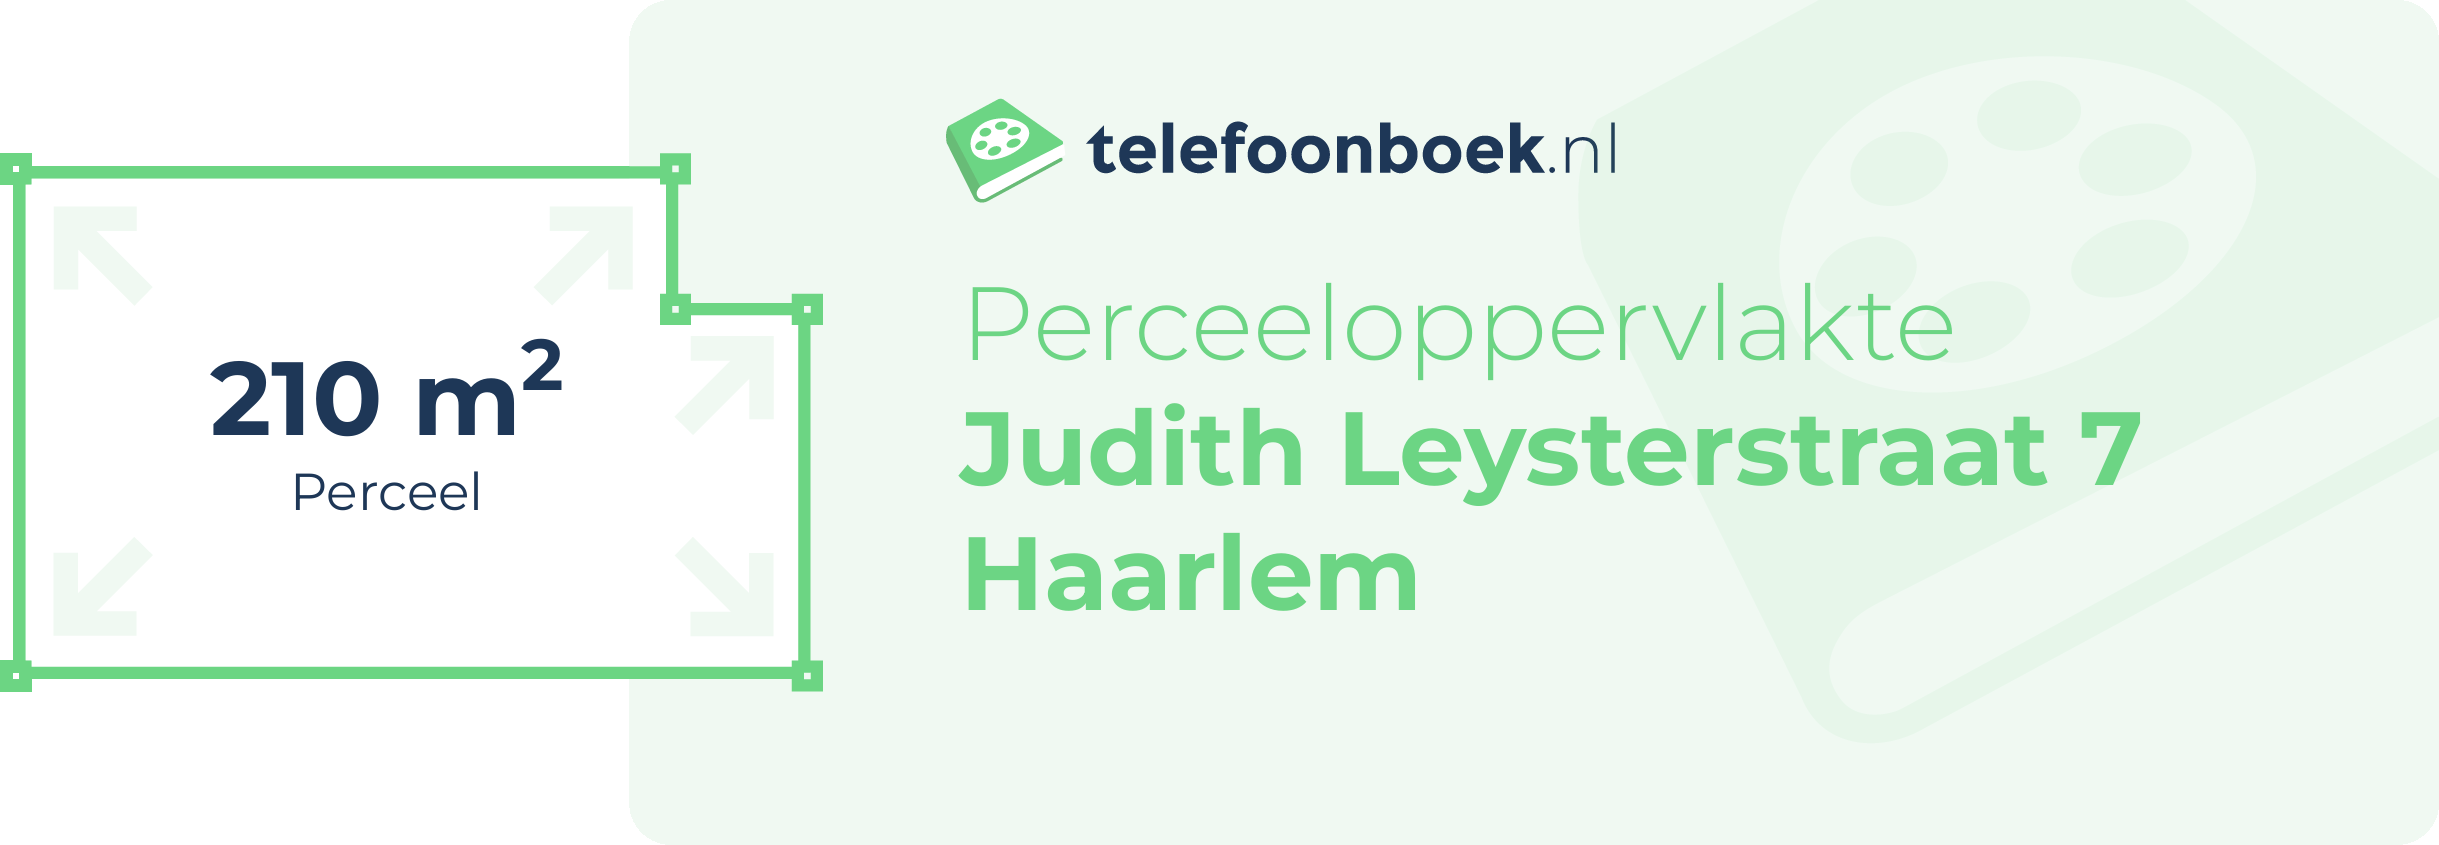 Perceeloppervlakte Judith Leysterstraat 7 Haarlem